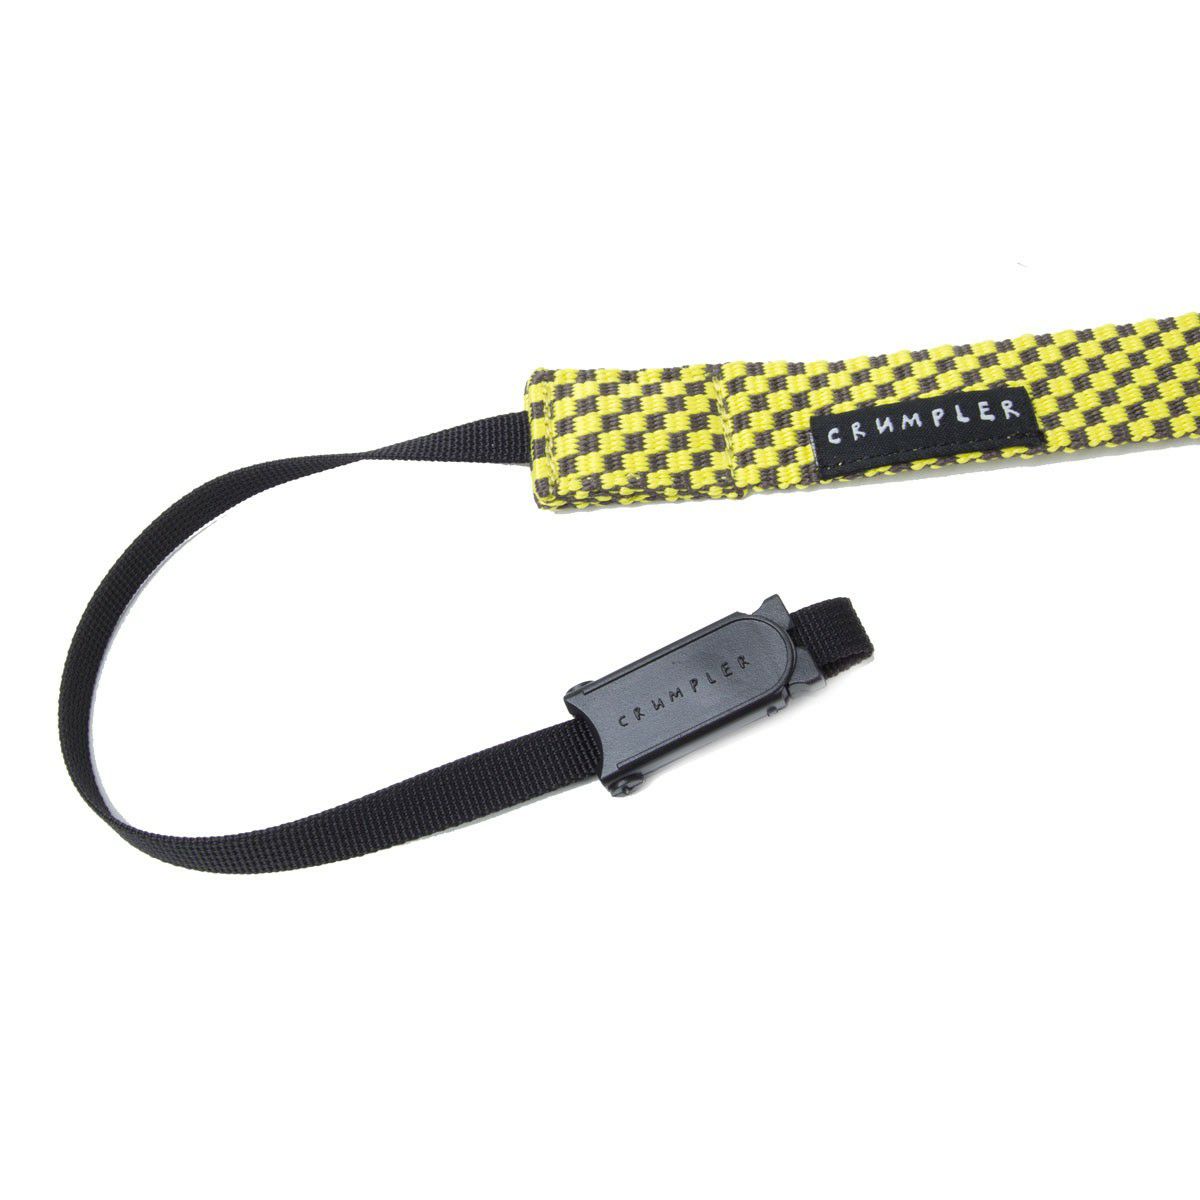 Crumpler Check Strap cameo grey yellow lemon CHST-004 camera accessories